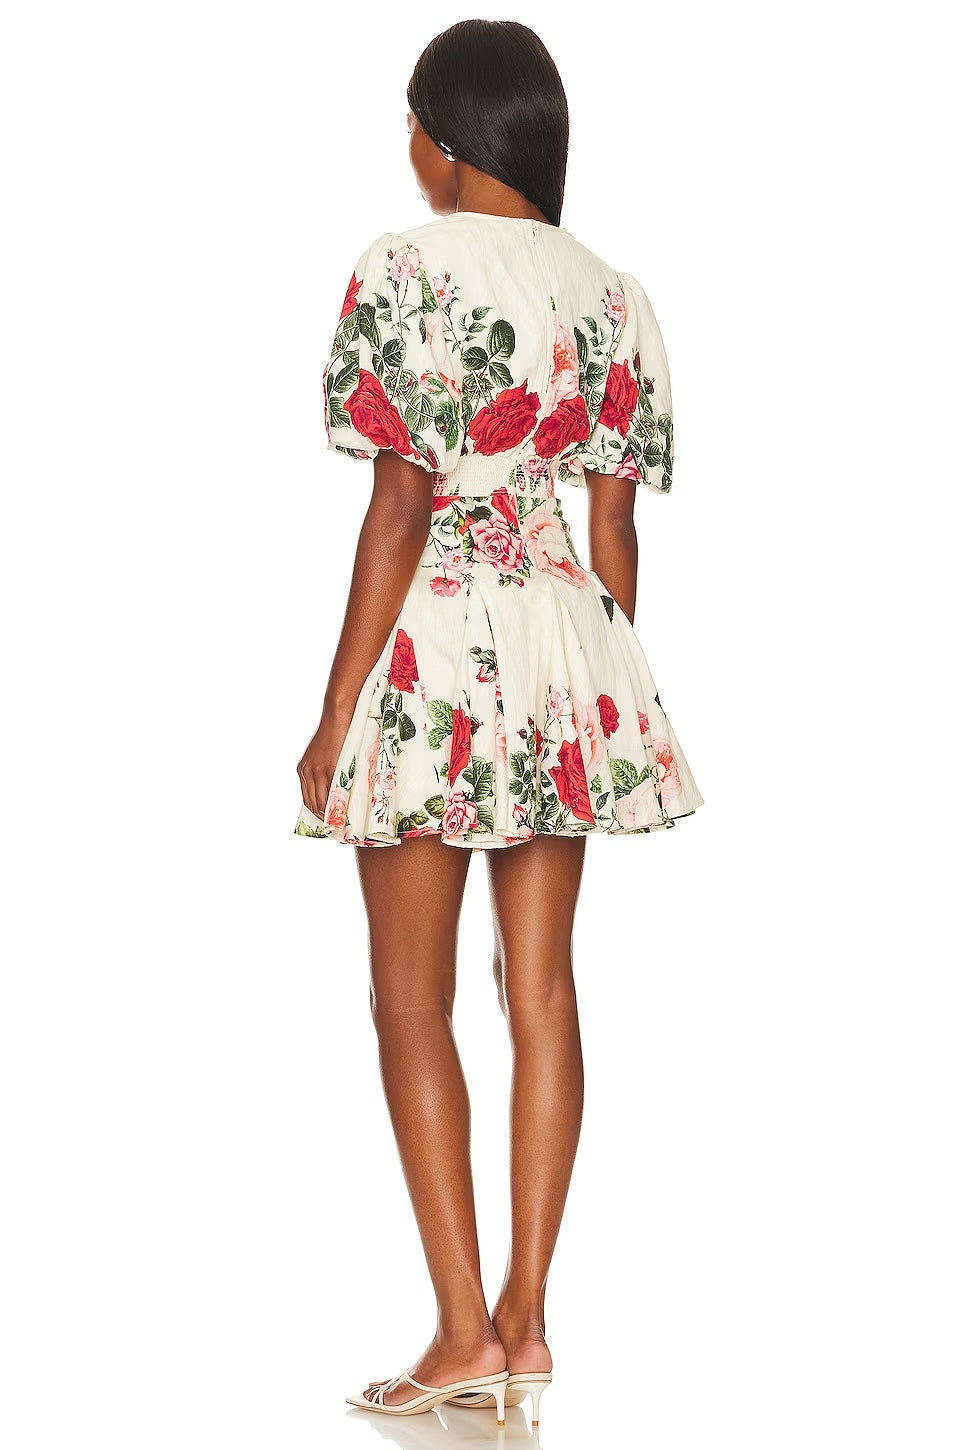 Hemant & Nandita Rose Print Short Dress, floral dress, mini dress, puffed sleeved dress, women's clothing